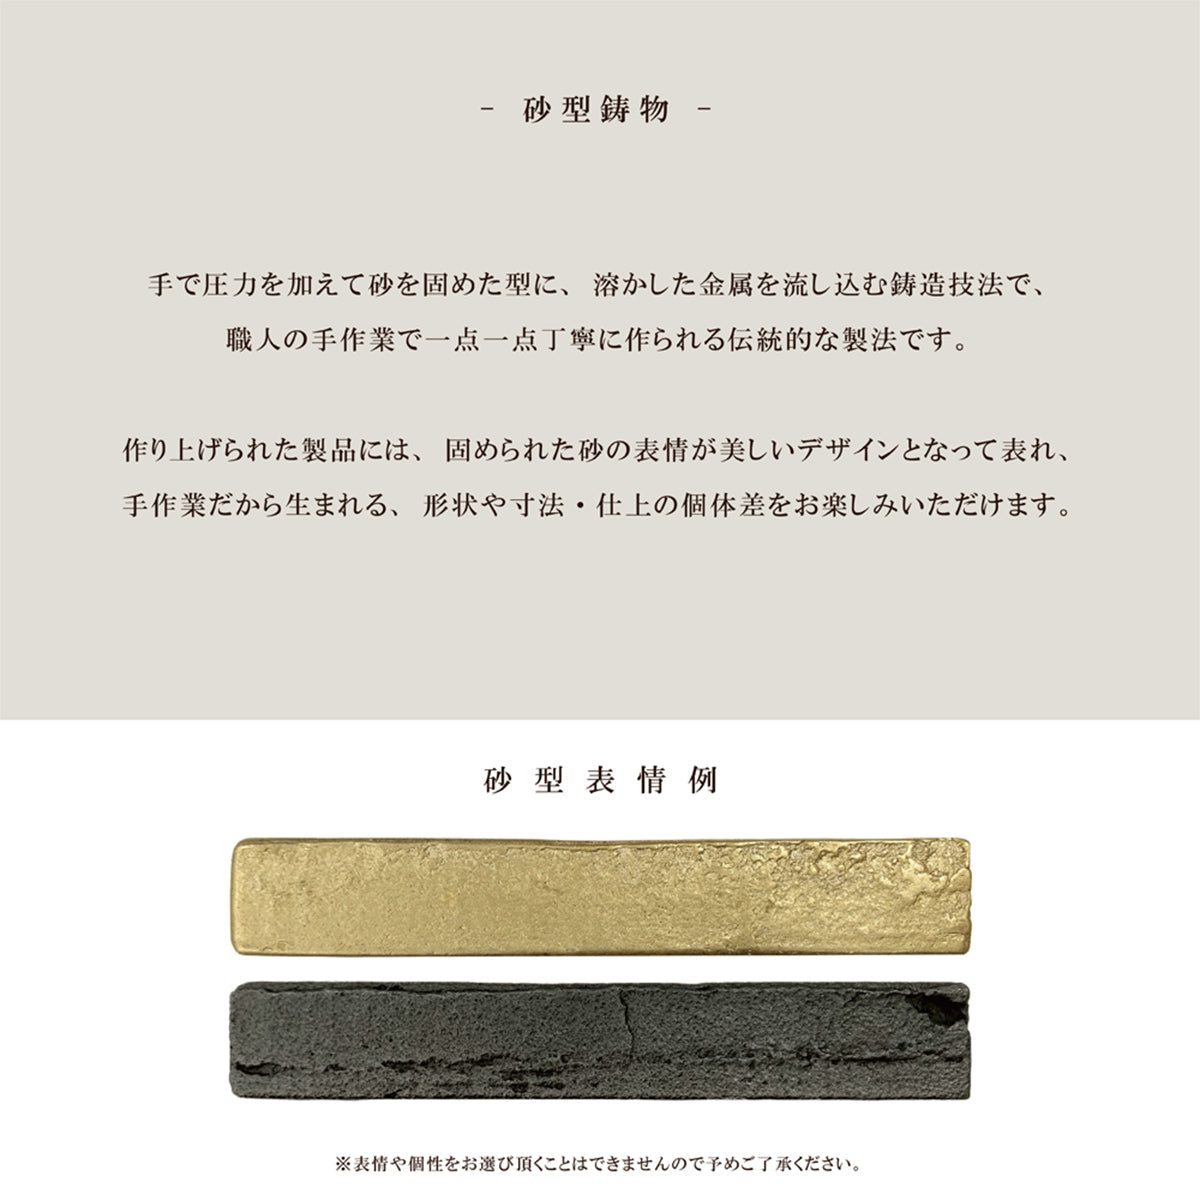 Brass Casting 真鍮鋳物 おしゃれ フック (大 黒染め CB-203)